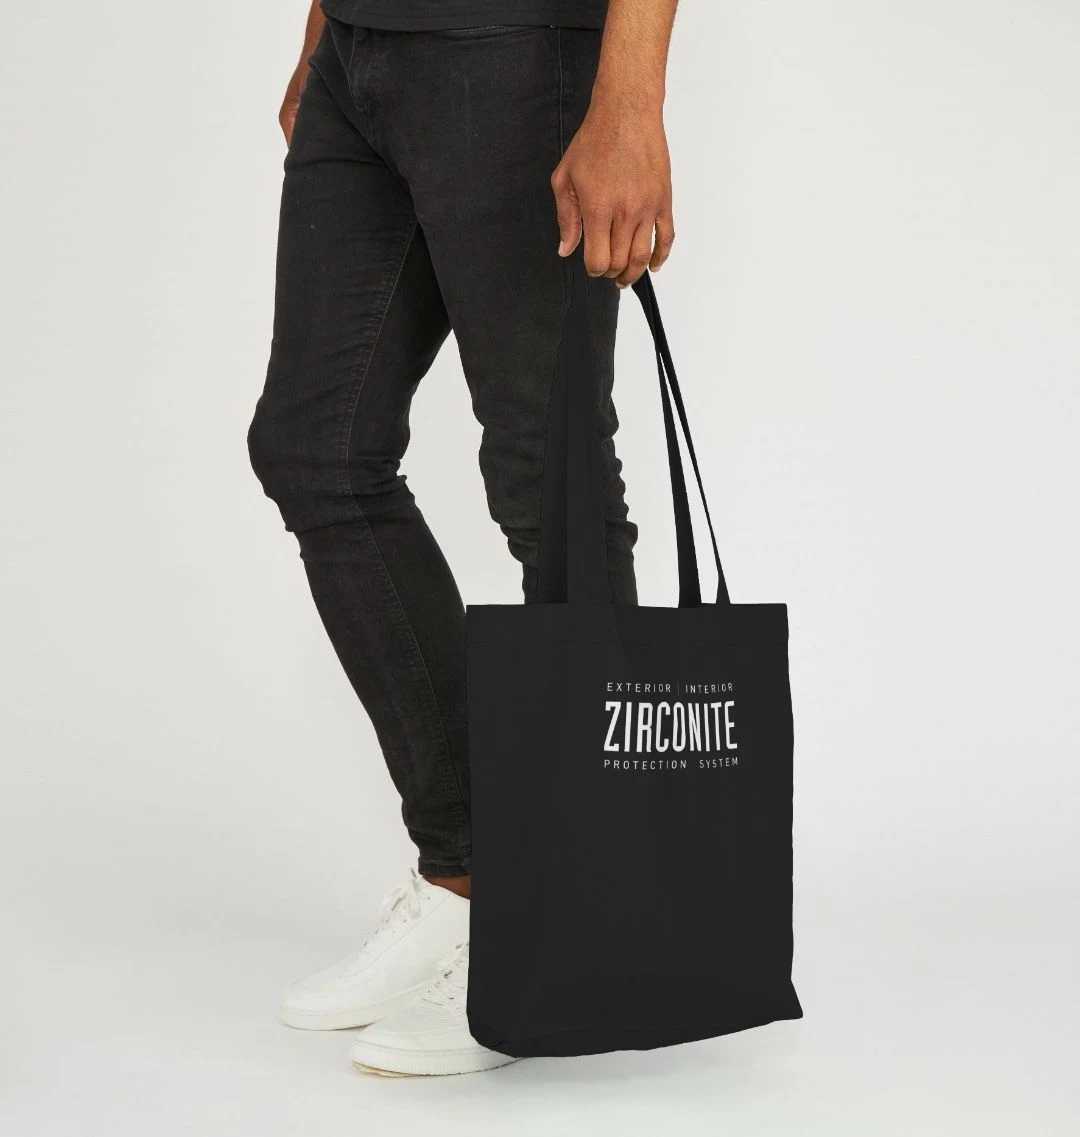 Black Zirconite Tote Bag